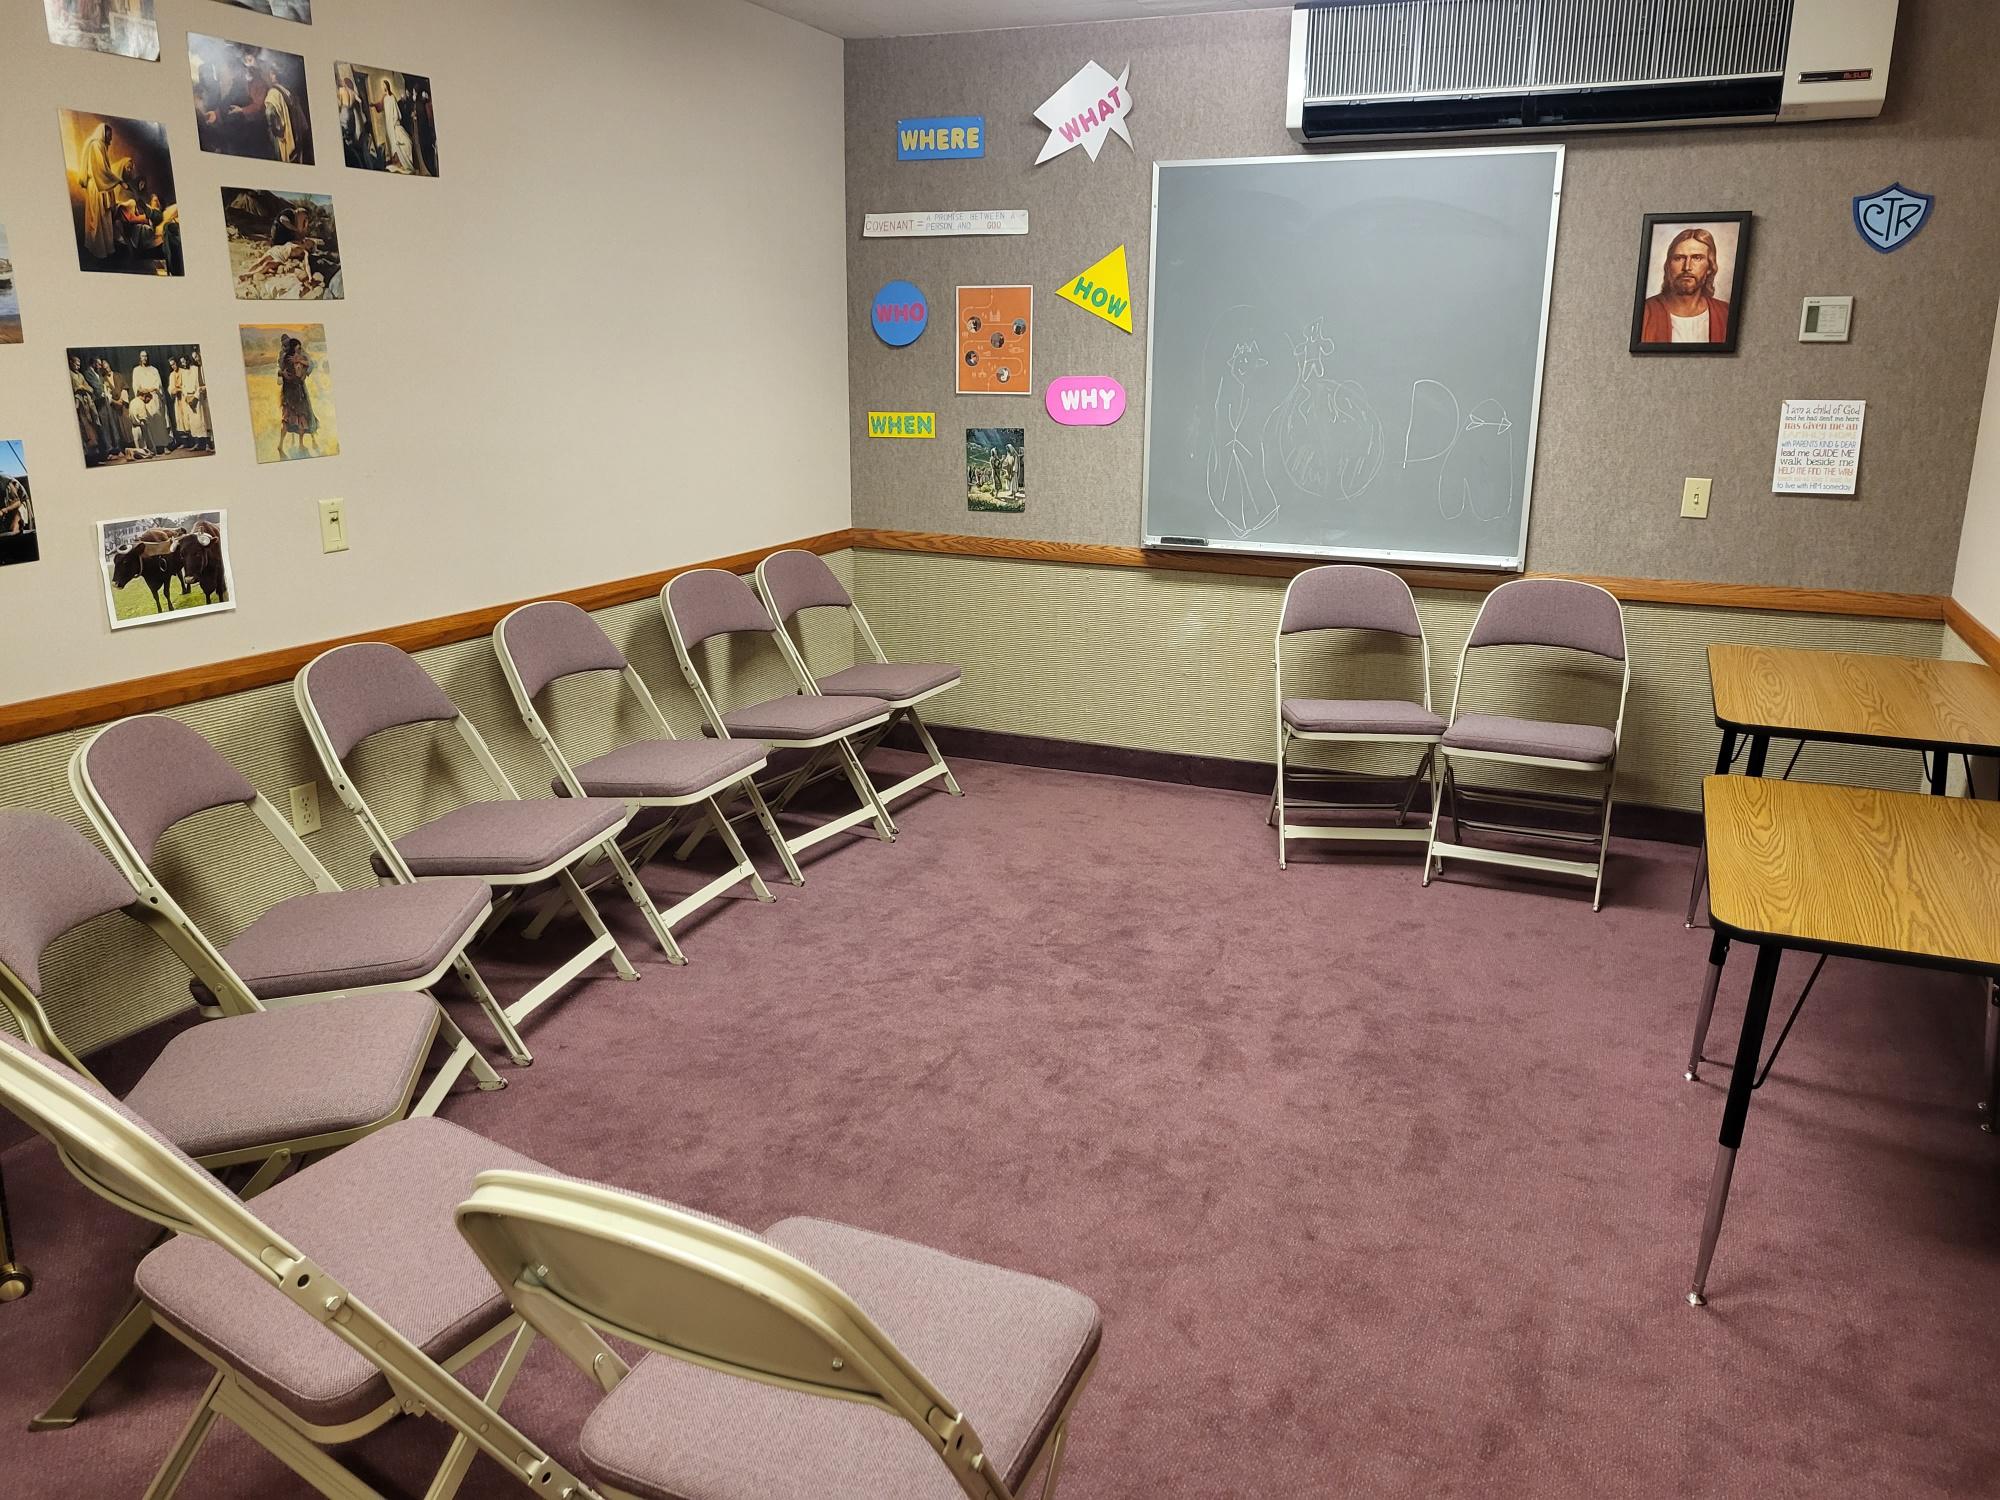 Small Class room